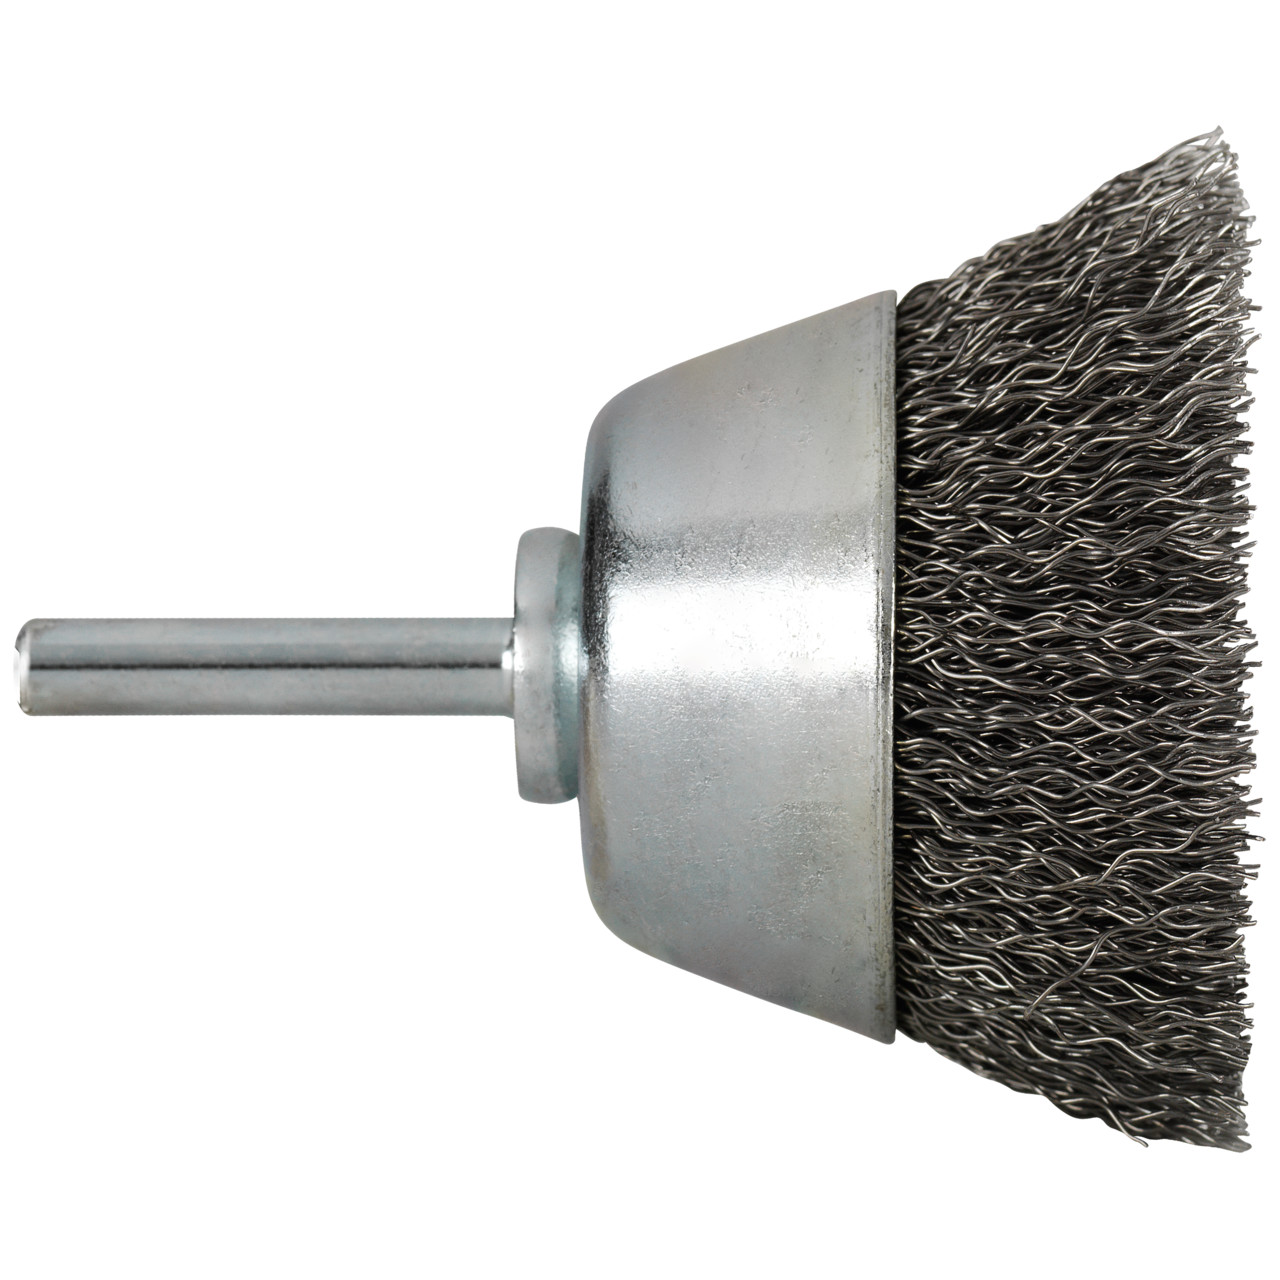 Tyrolit Spazzole a tazza DxLxH-GExI 40x10x15-6x30 Per acciaio, forma: 52TDW - (spazzole a tazza), Art. 890756